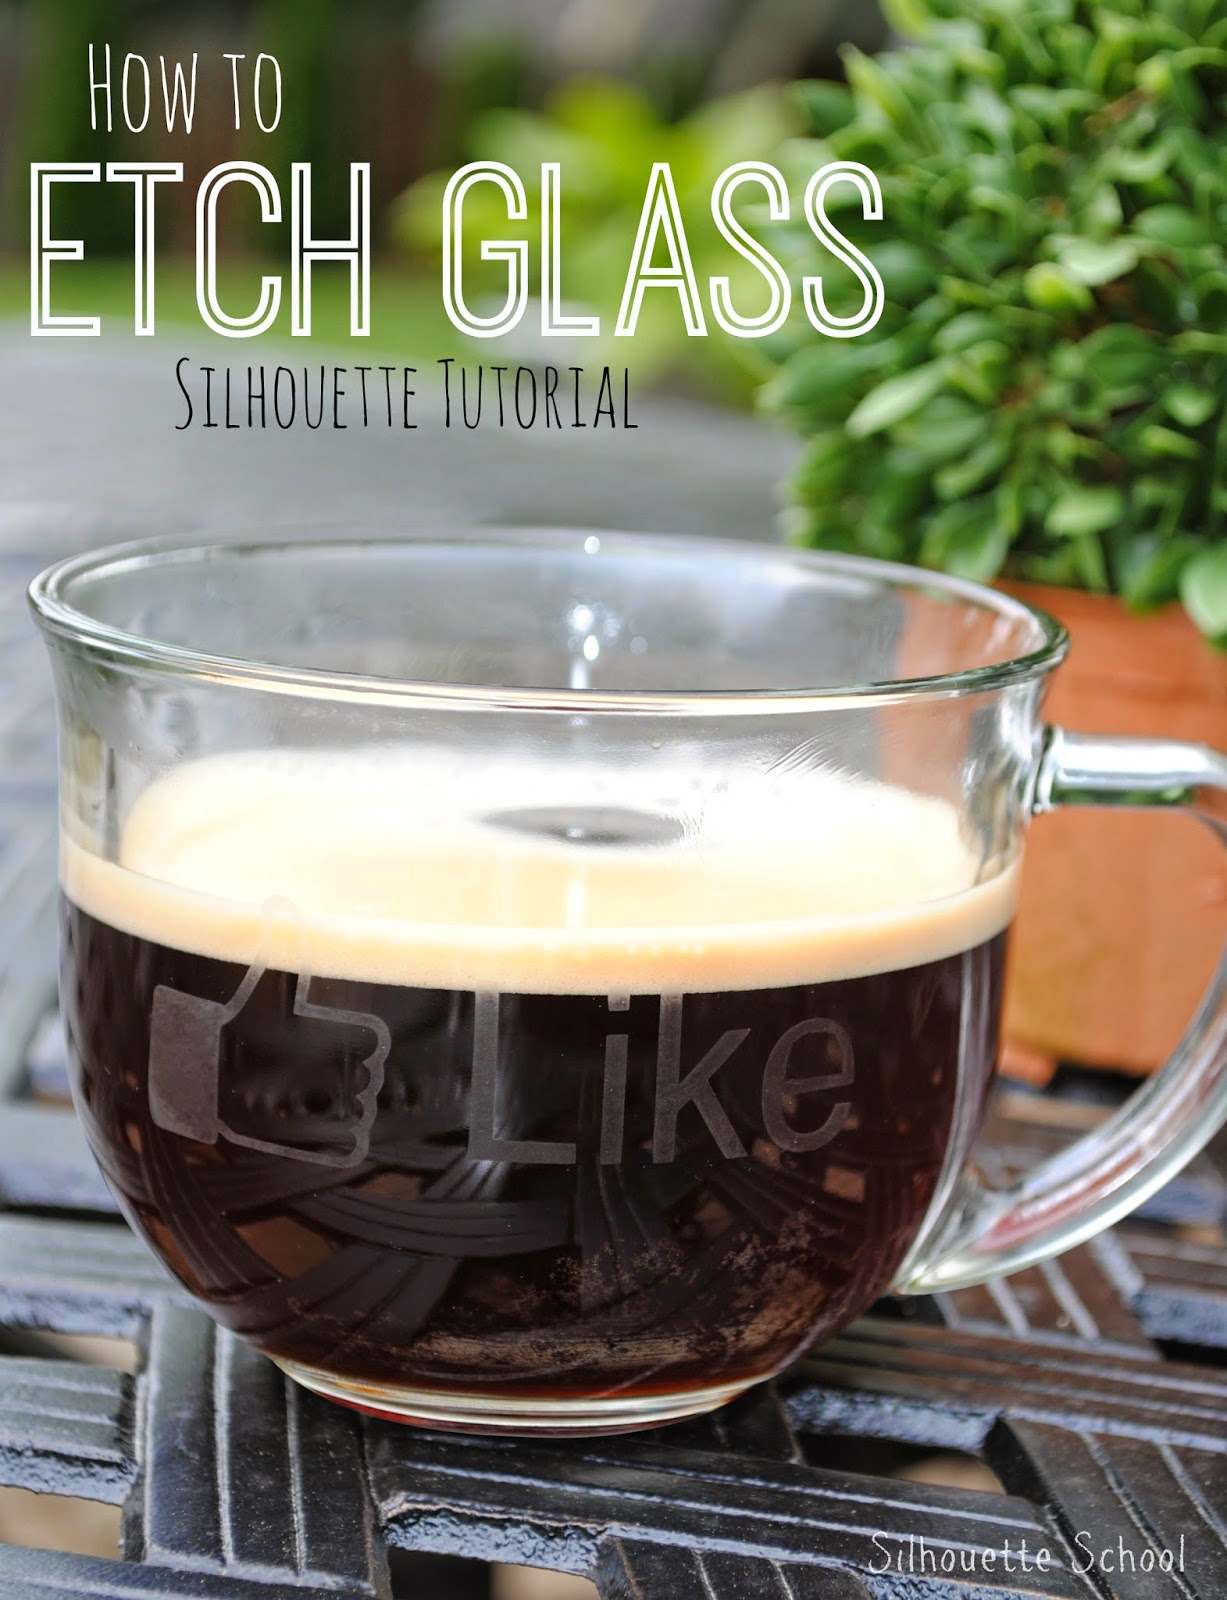 Etch, glass, Silhouette tutorial